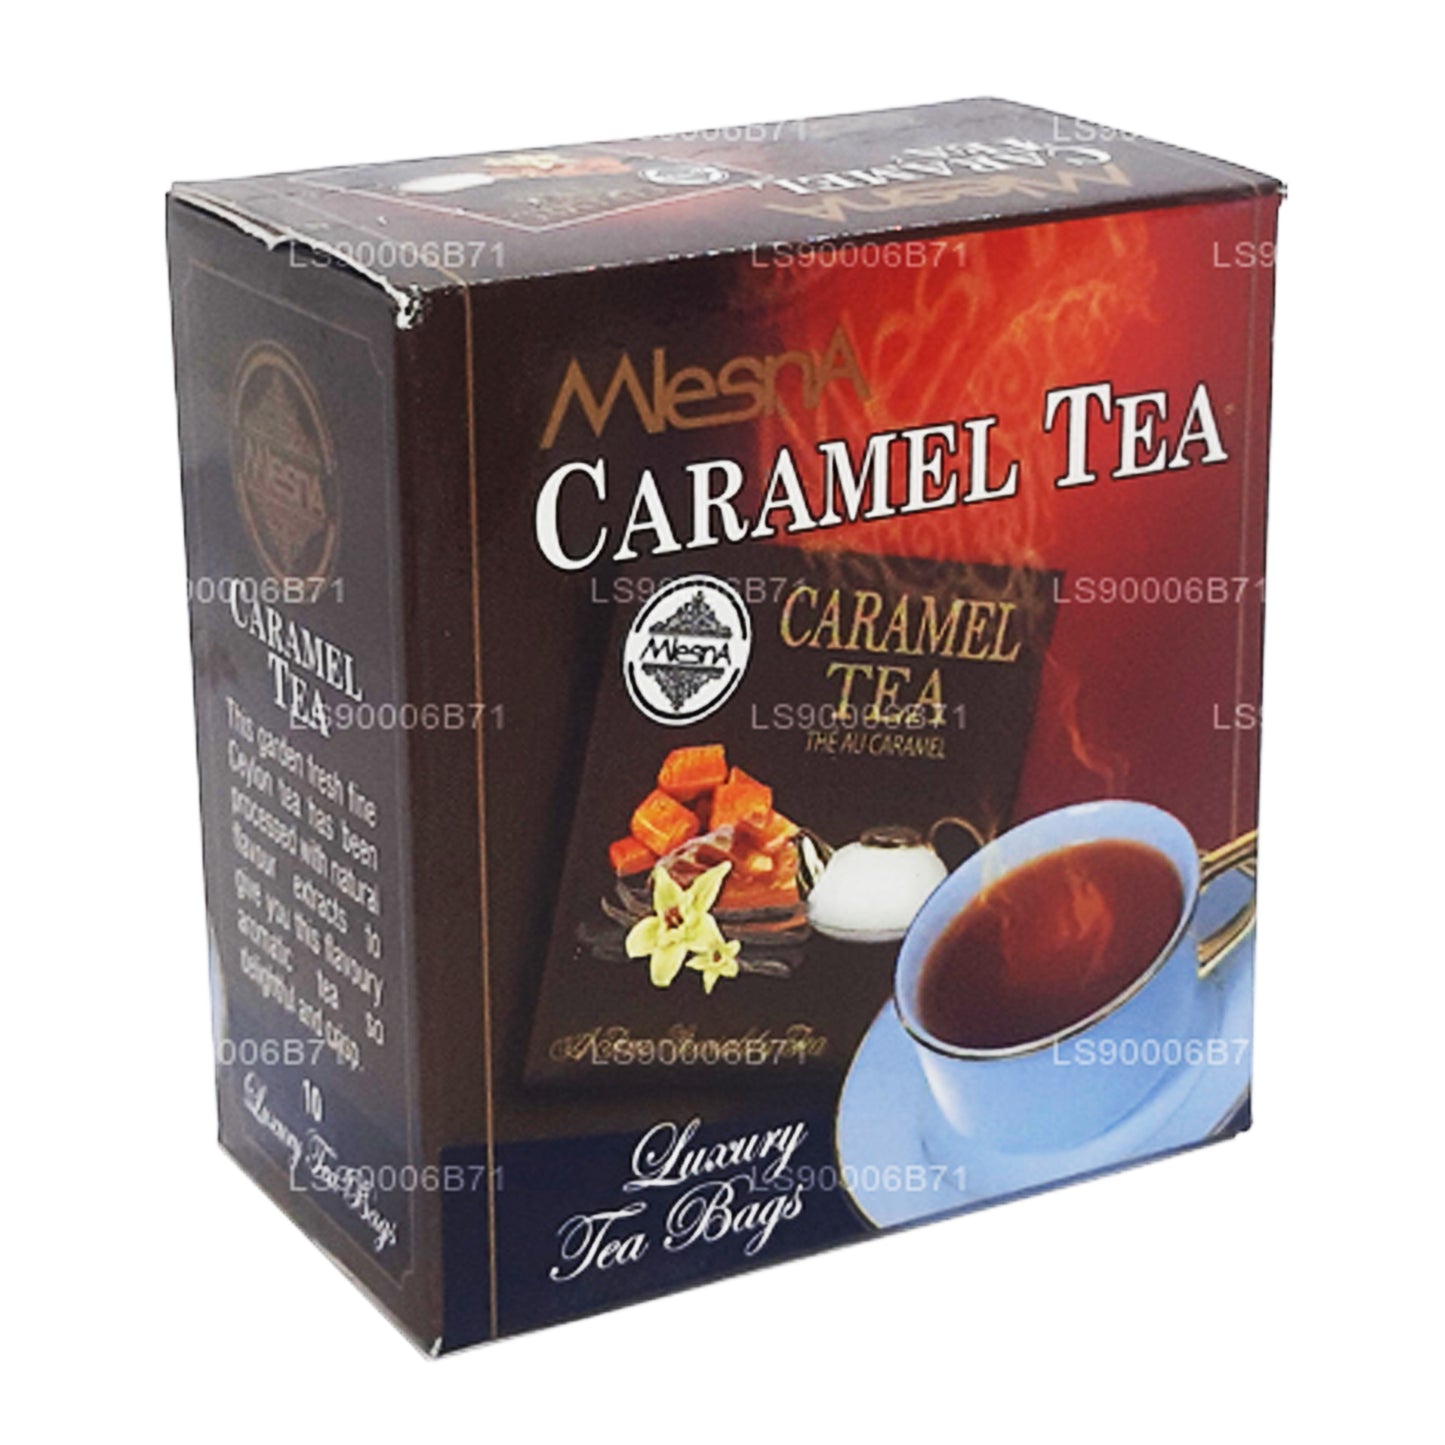 Mlesna Caramel Tea (20g) 10 Luxury Tea Bags